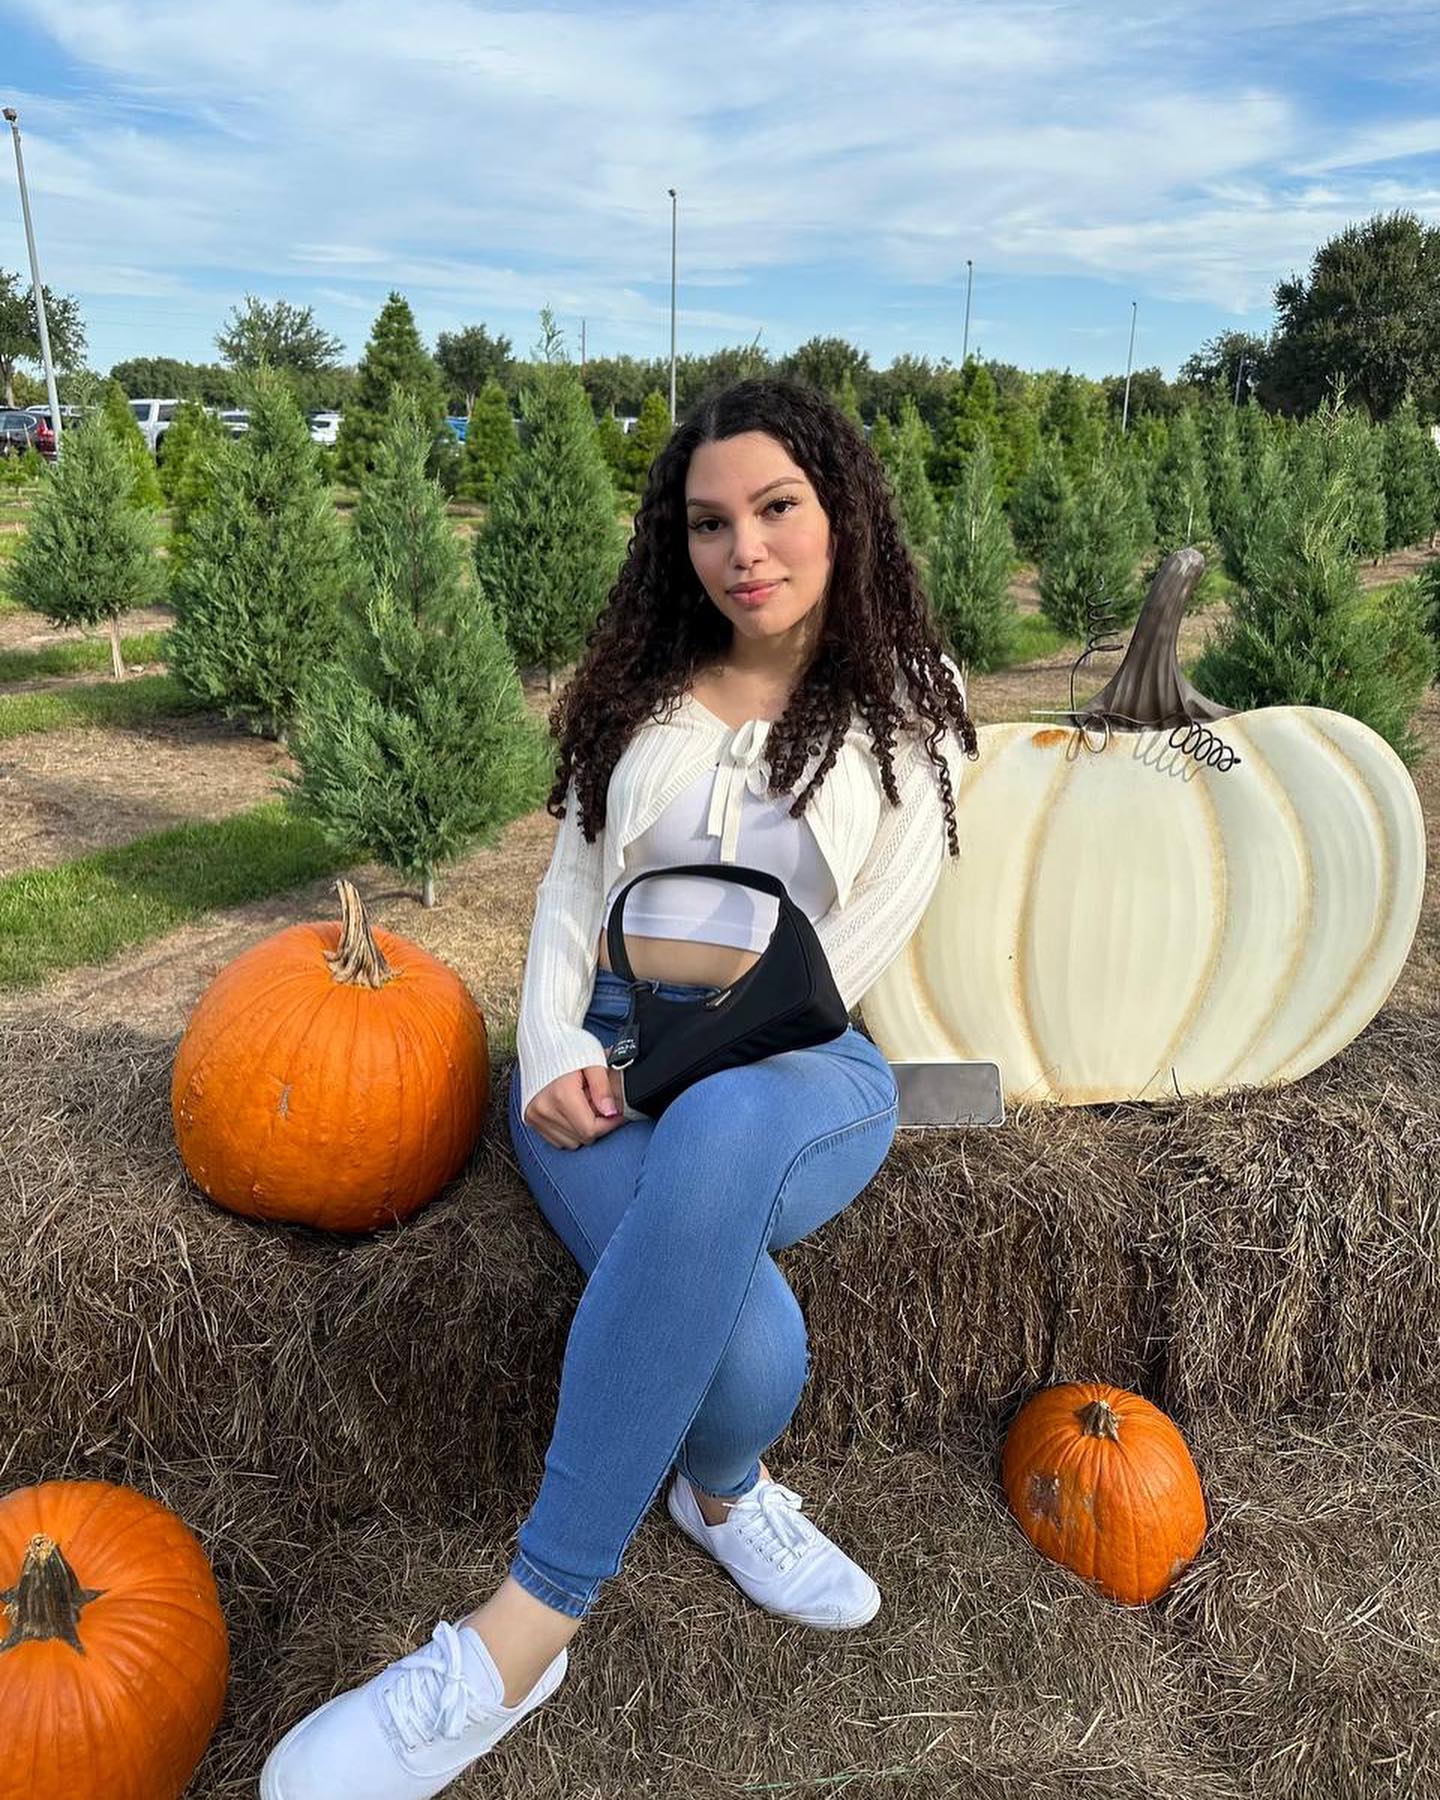 Just a girl in a pumpkin patch 🎃